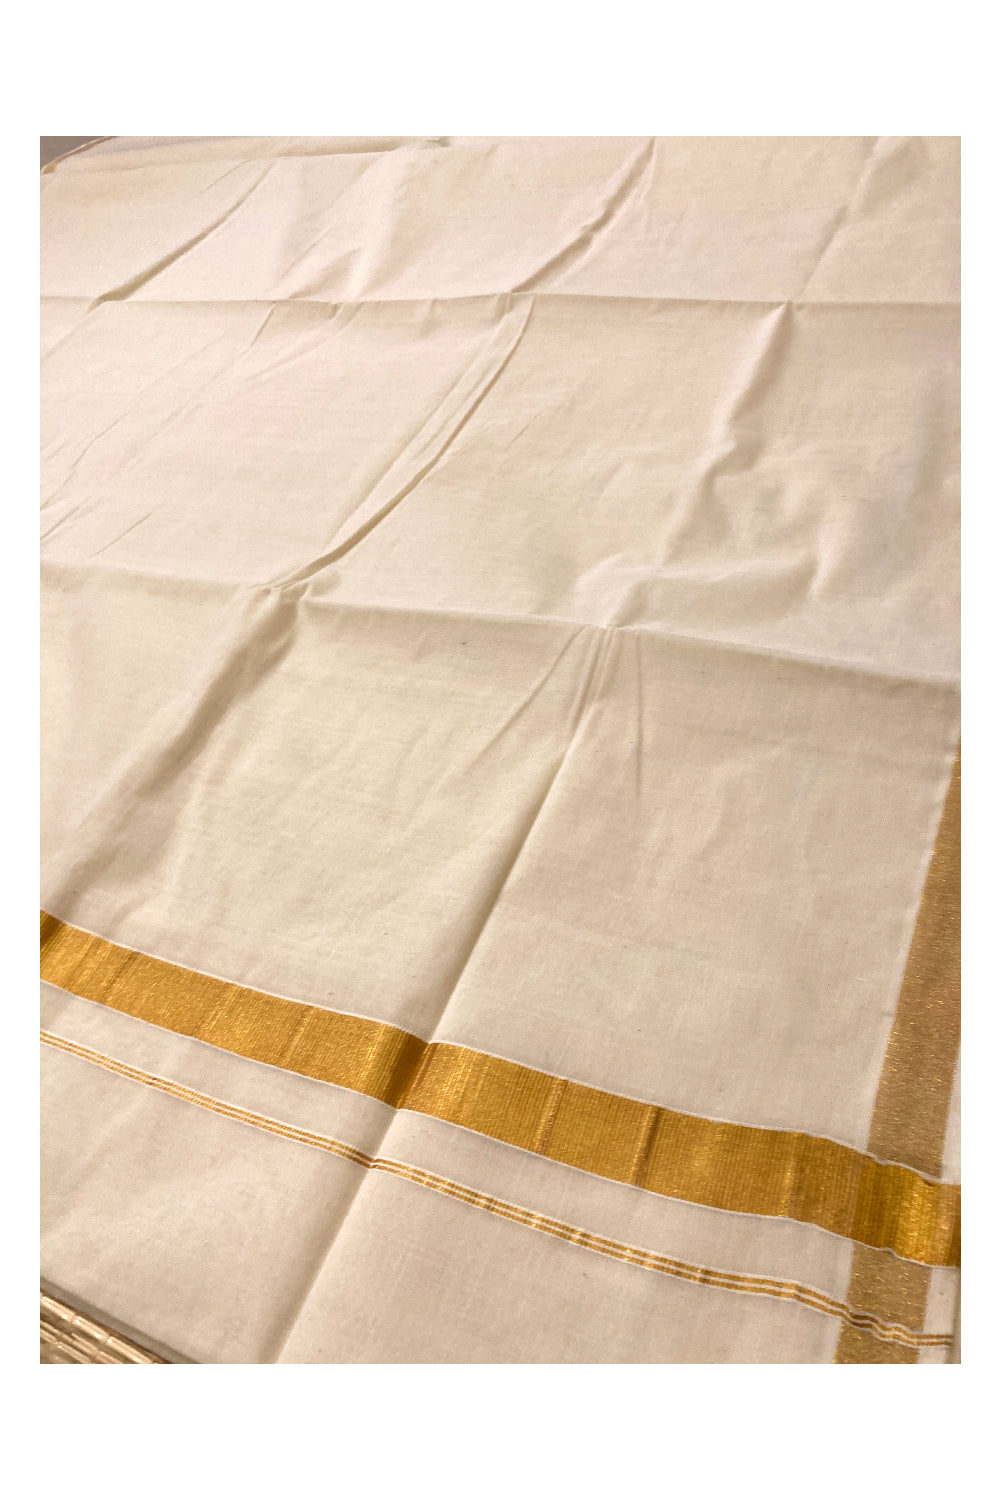 Kerala Plain Pure Cotton Saree with 1 Inch Kasavu Border